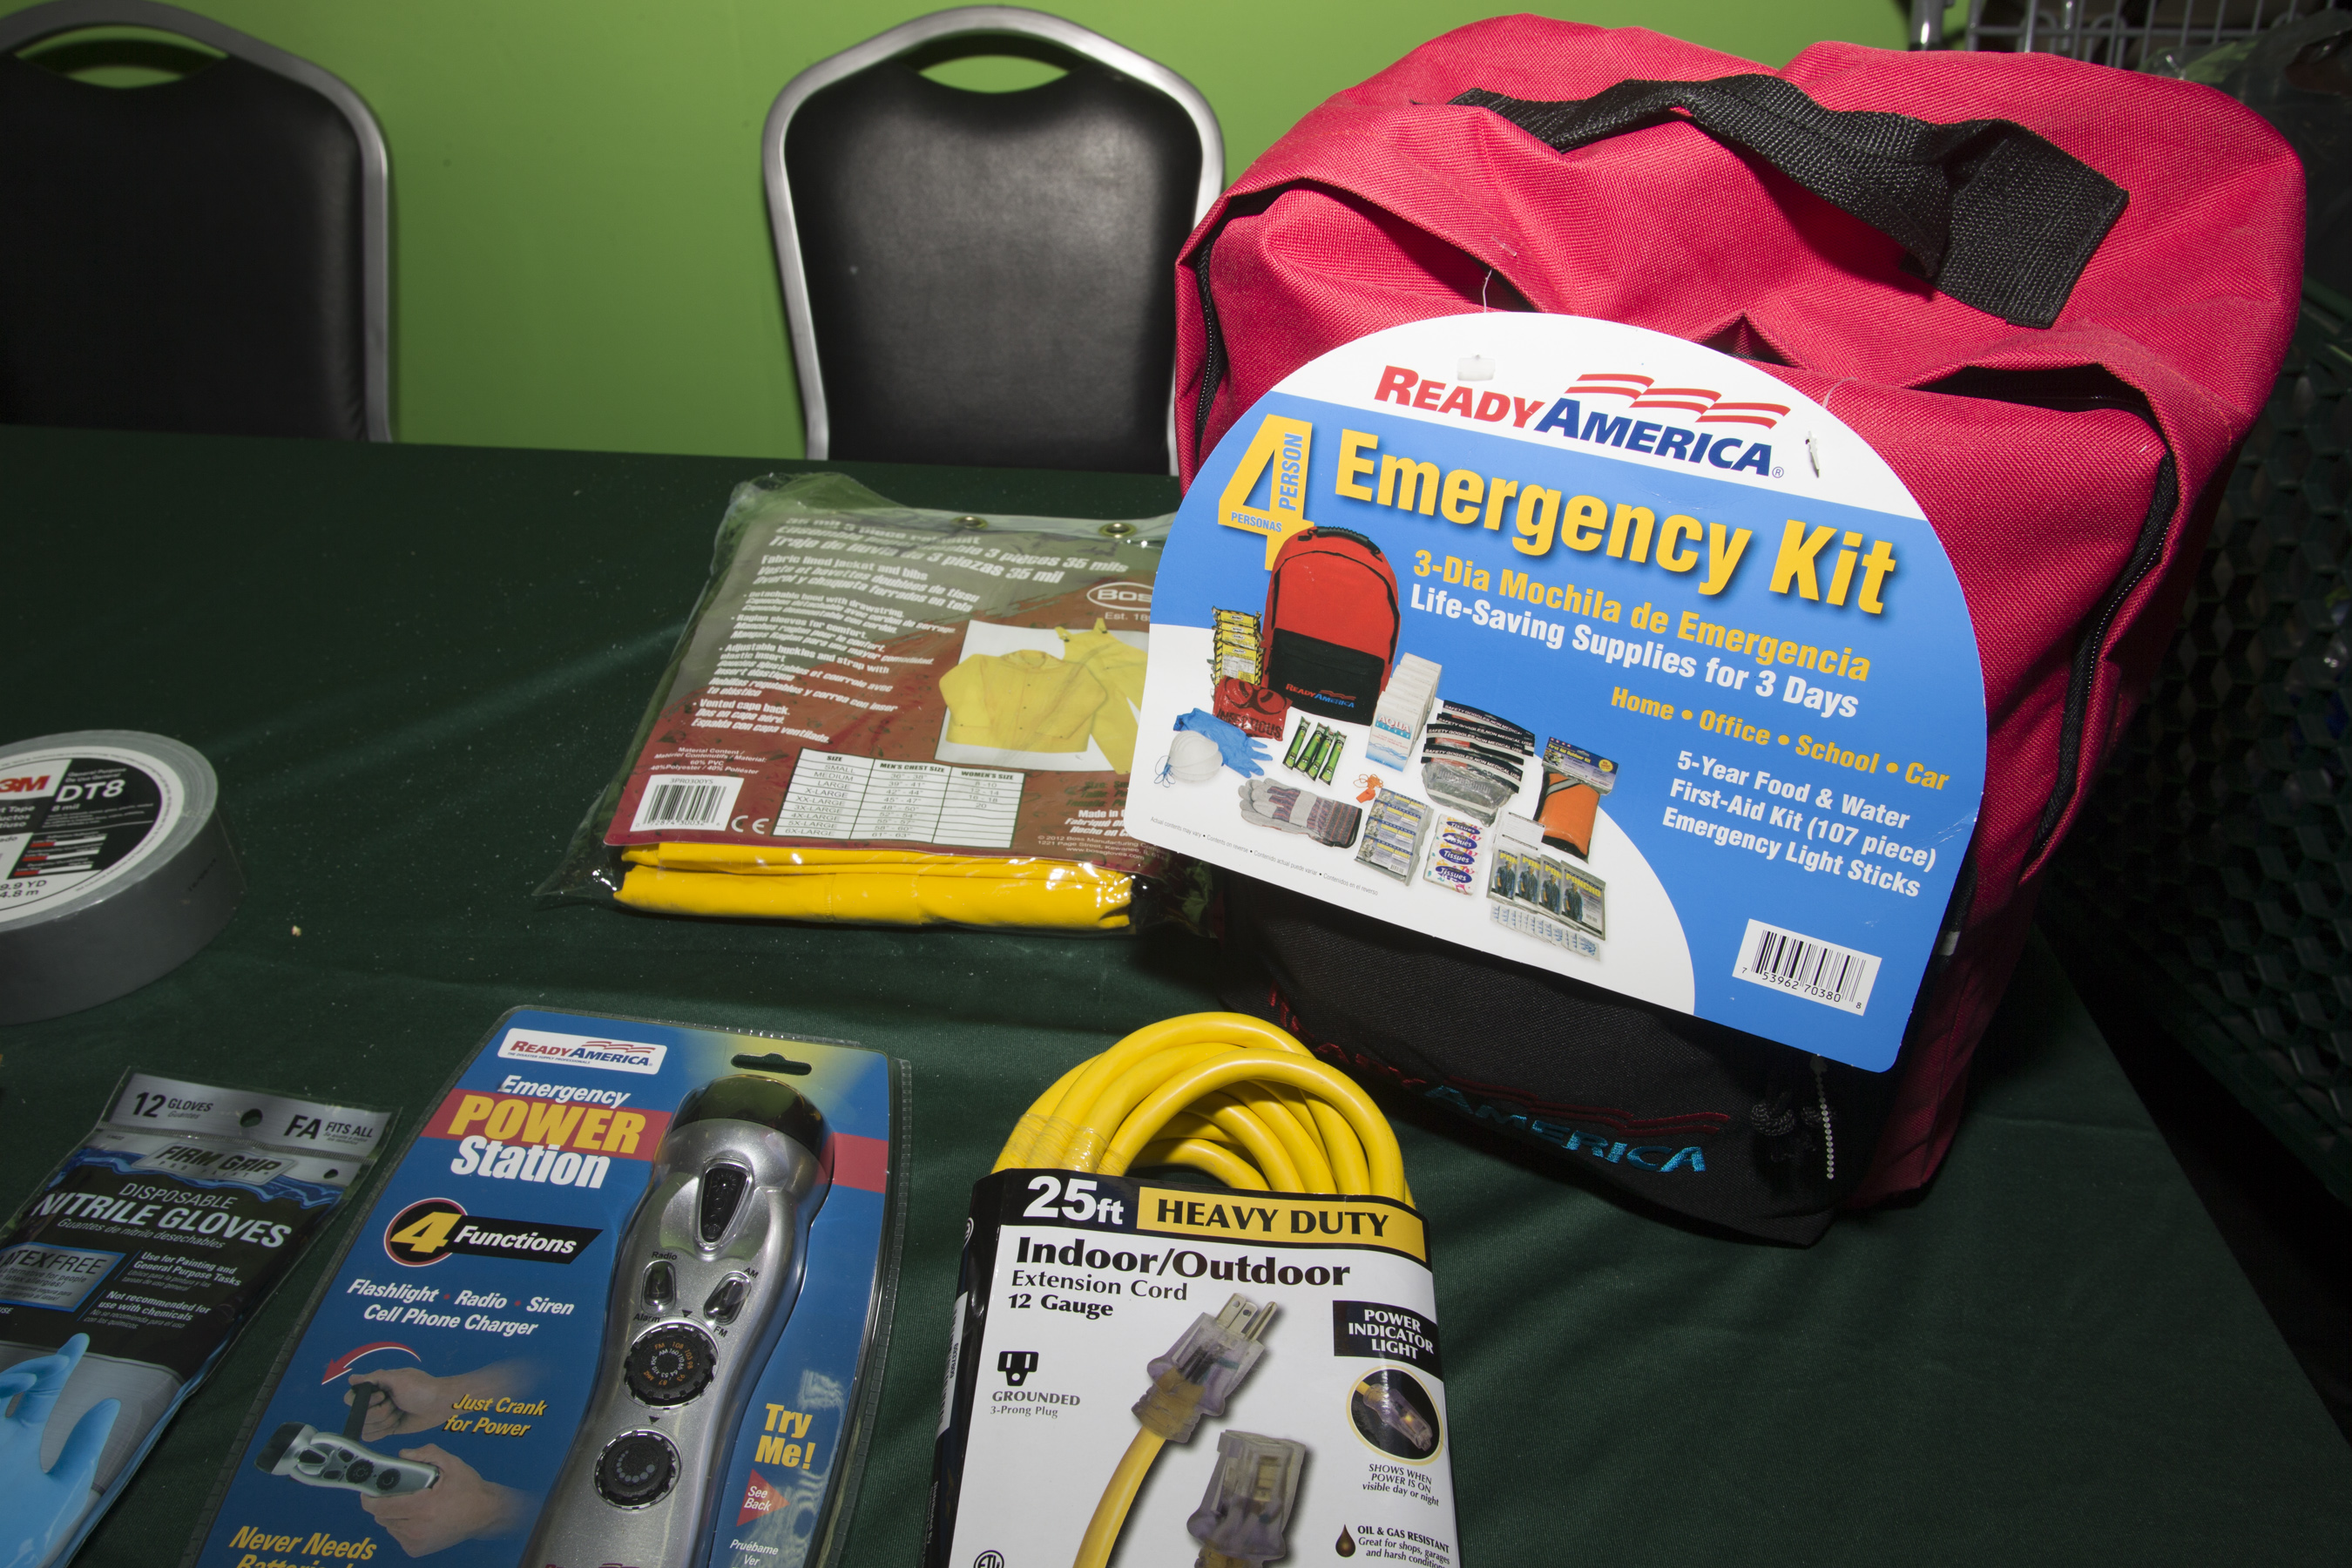 Emergency kit supplies